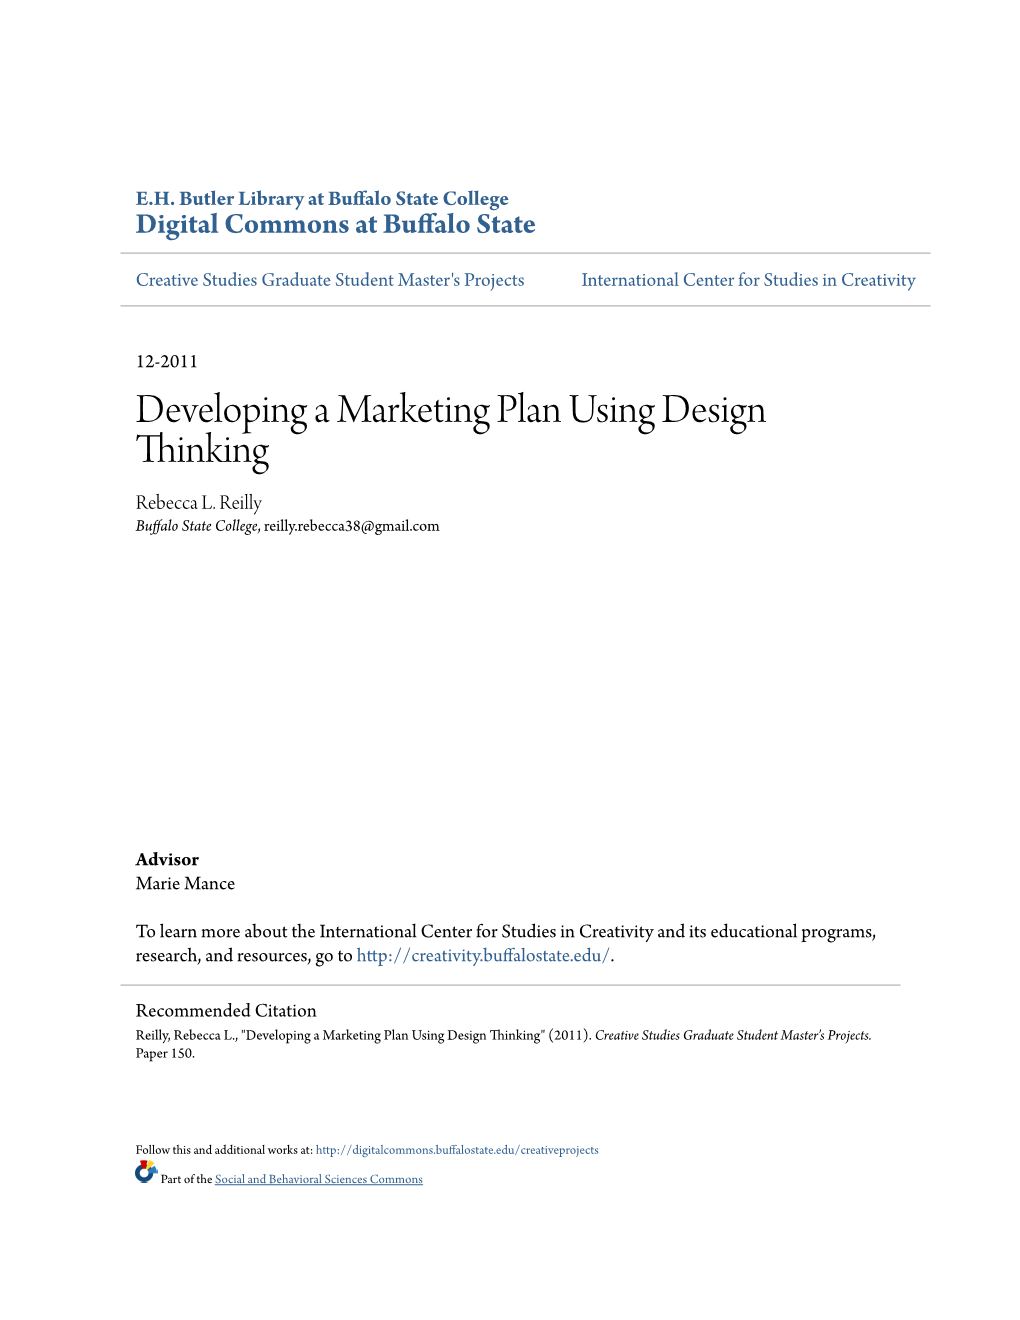 Developing a Marketing Plan Using Design Thinking Rebecca L